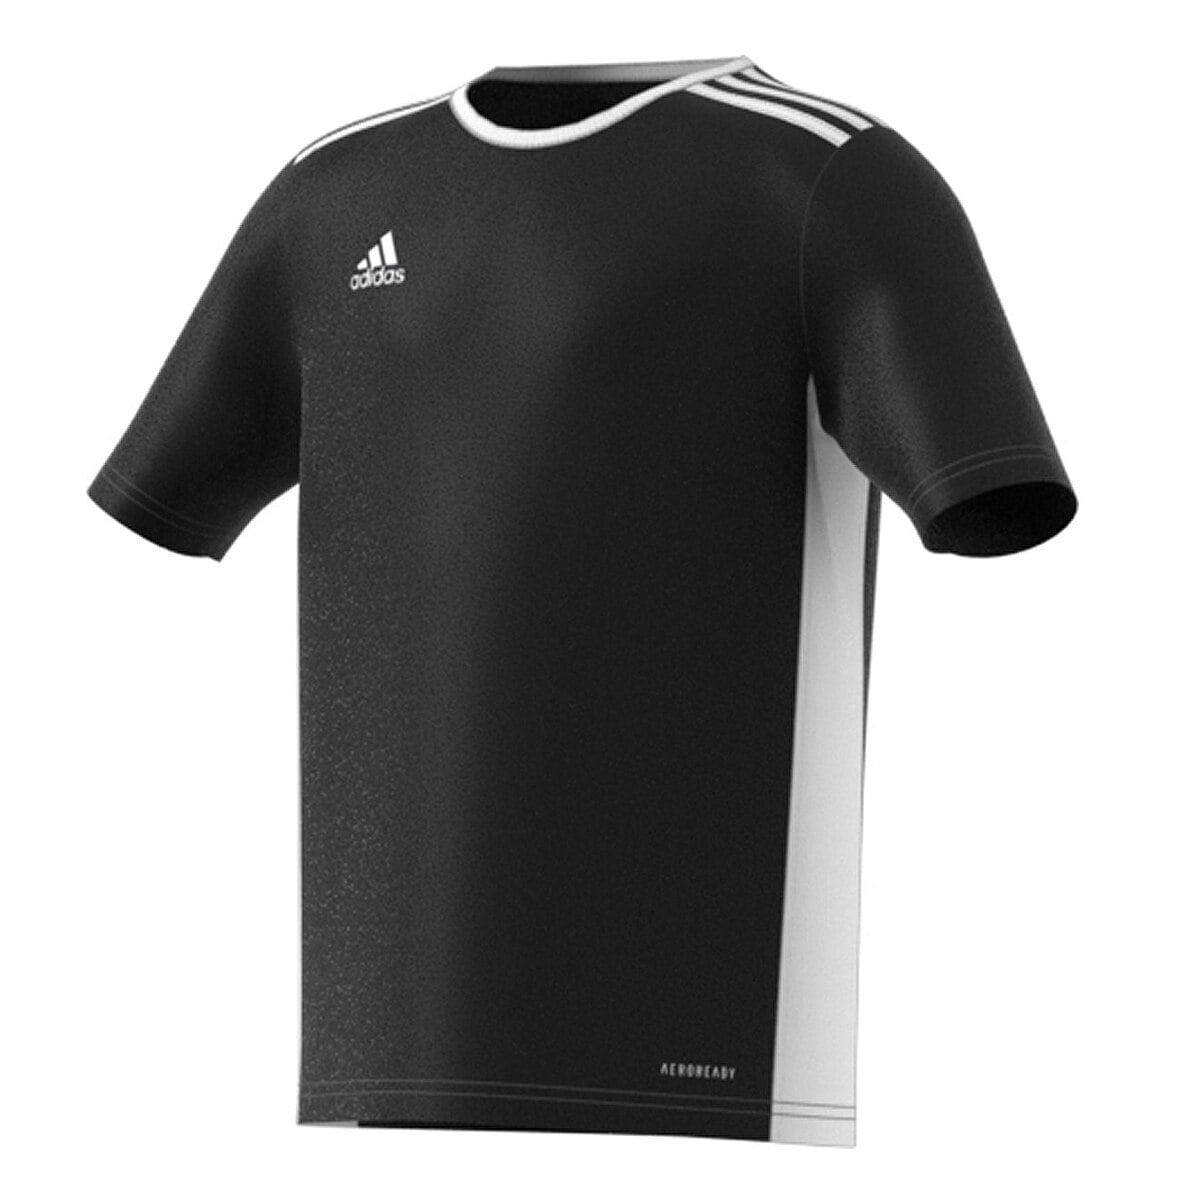 Adidas Entrada Youth Soccer Jersey CF1041 - Black, White - Walmart.com